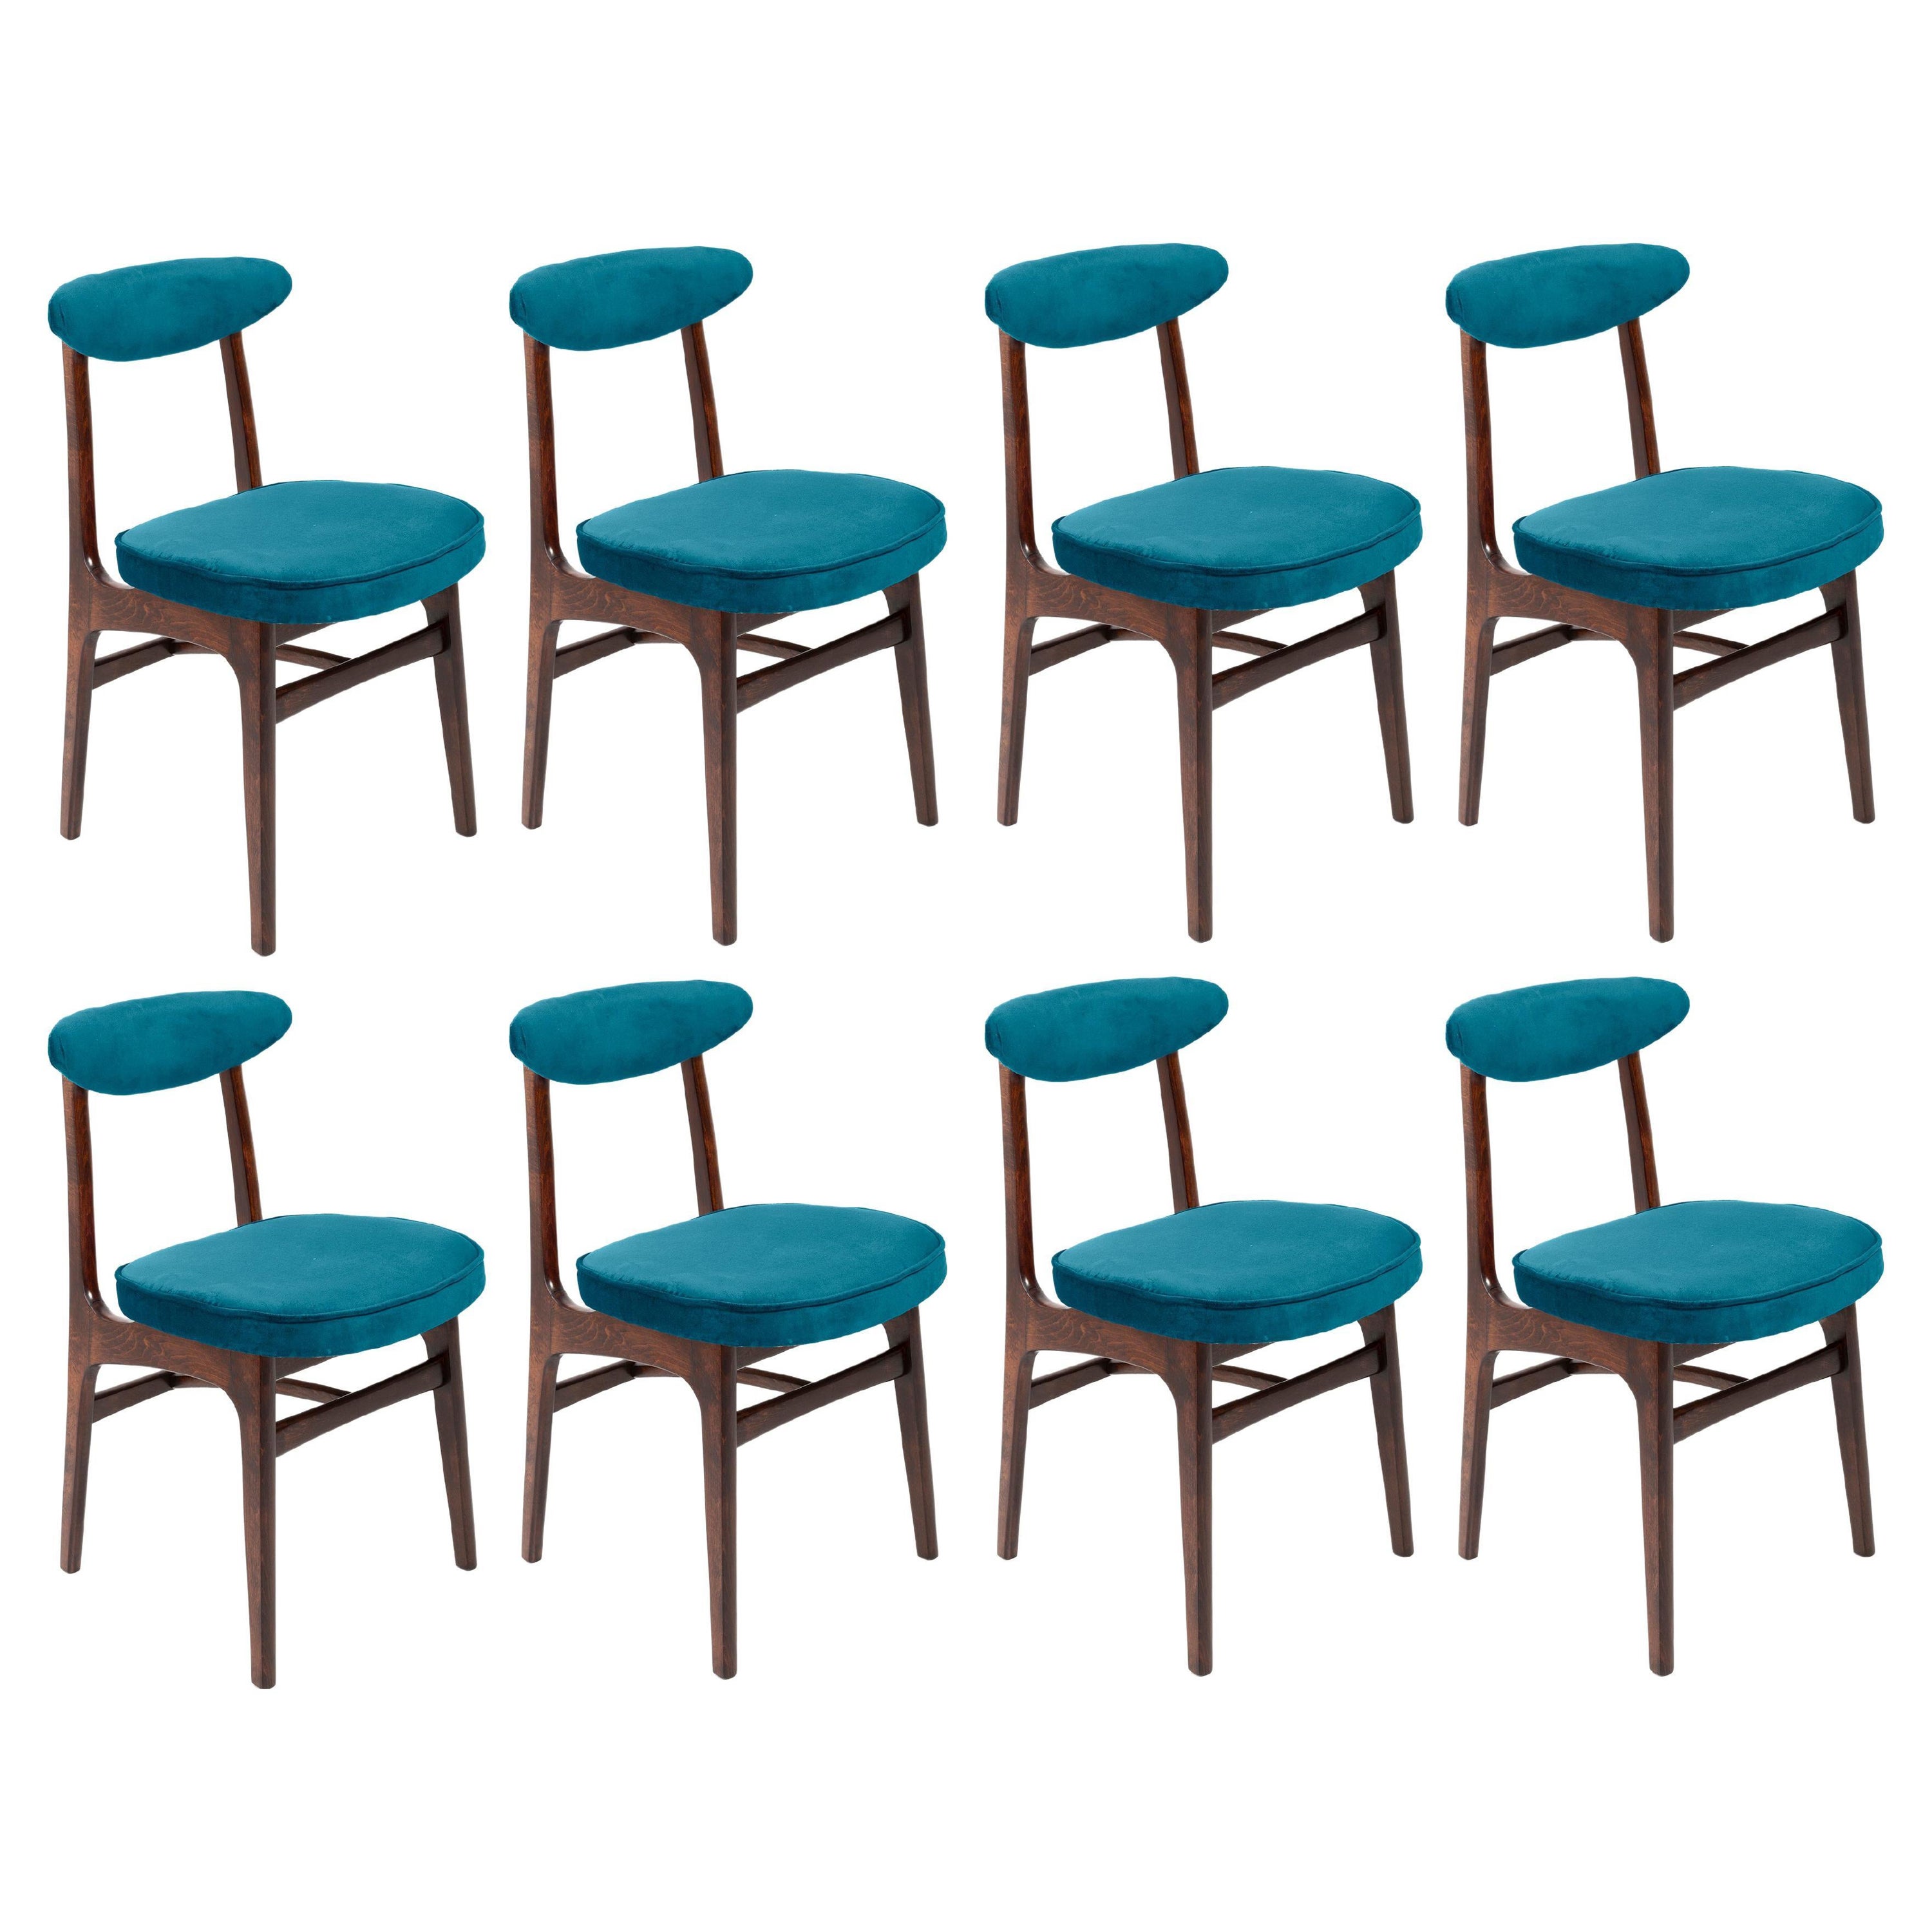 Eight 20th Century Petrol Blue Velvet Chairs by Rajmund Halas, Europe, 1960s For Sale